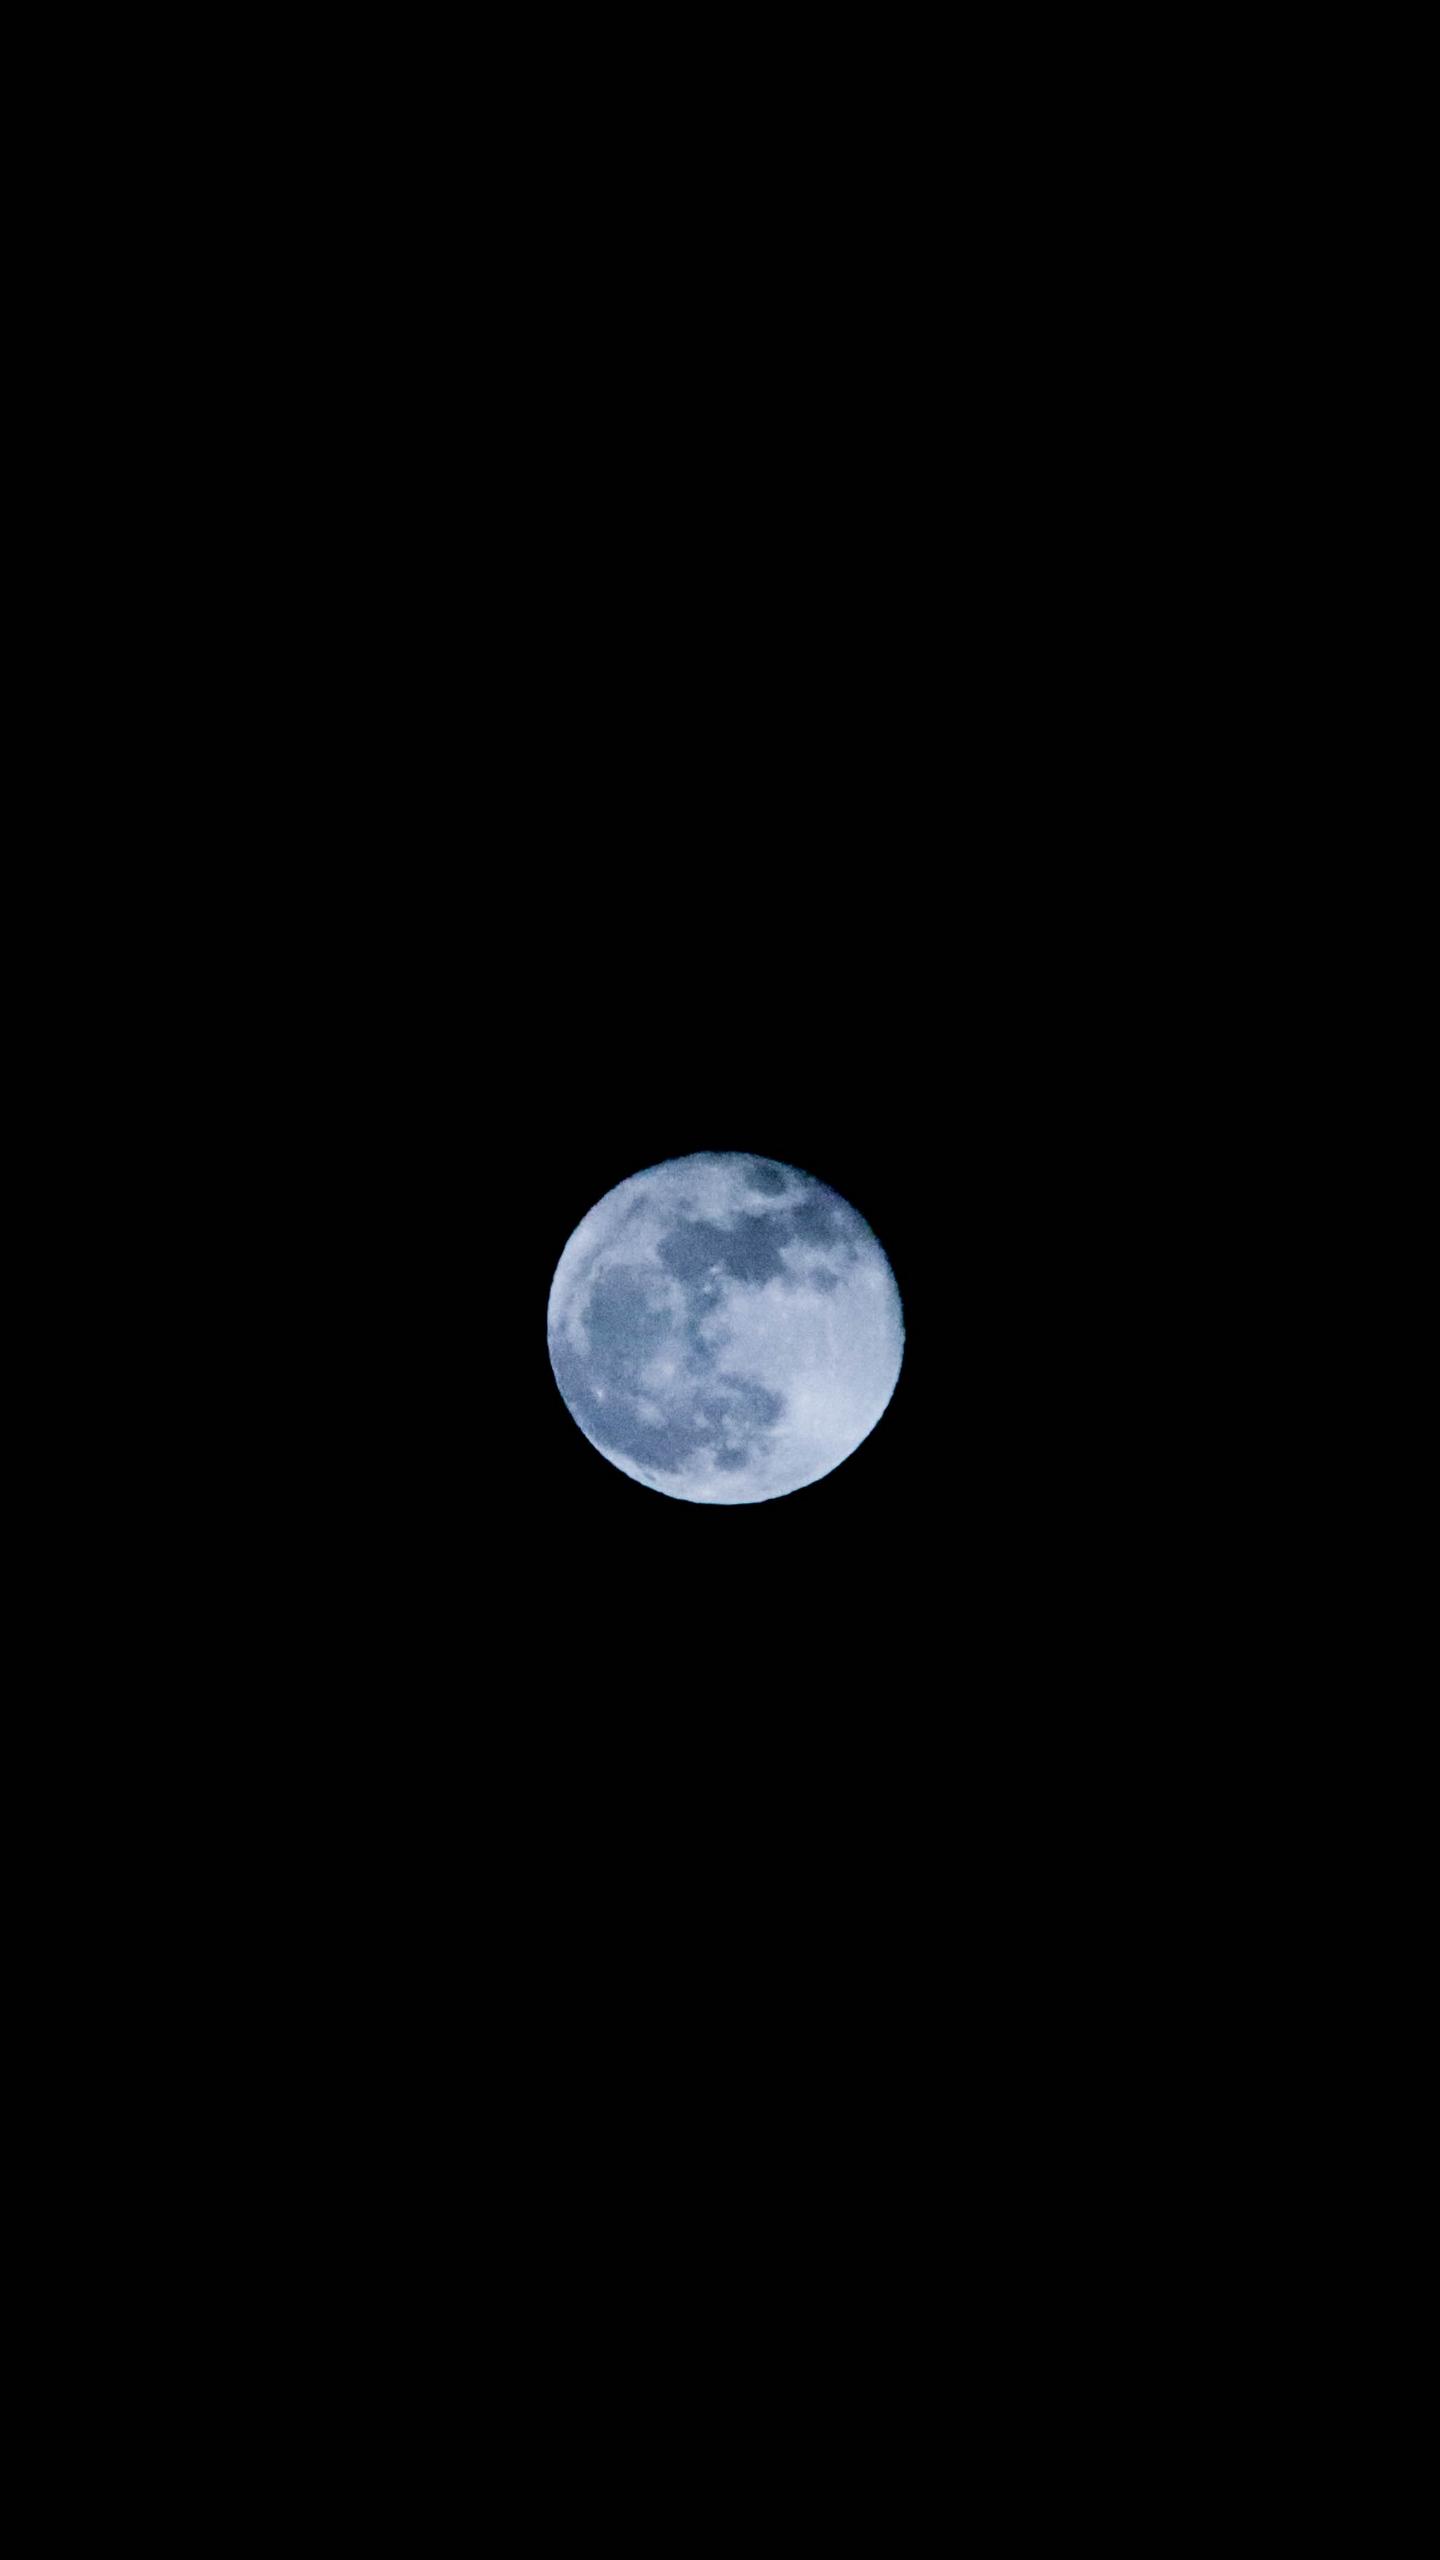 Download wallpaper 1440x2560 moon, space, sky, dark qhd